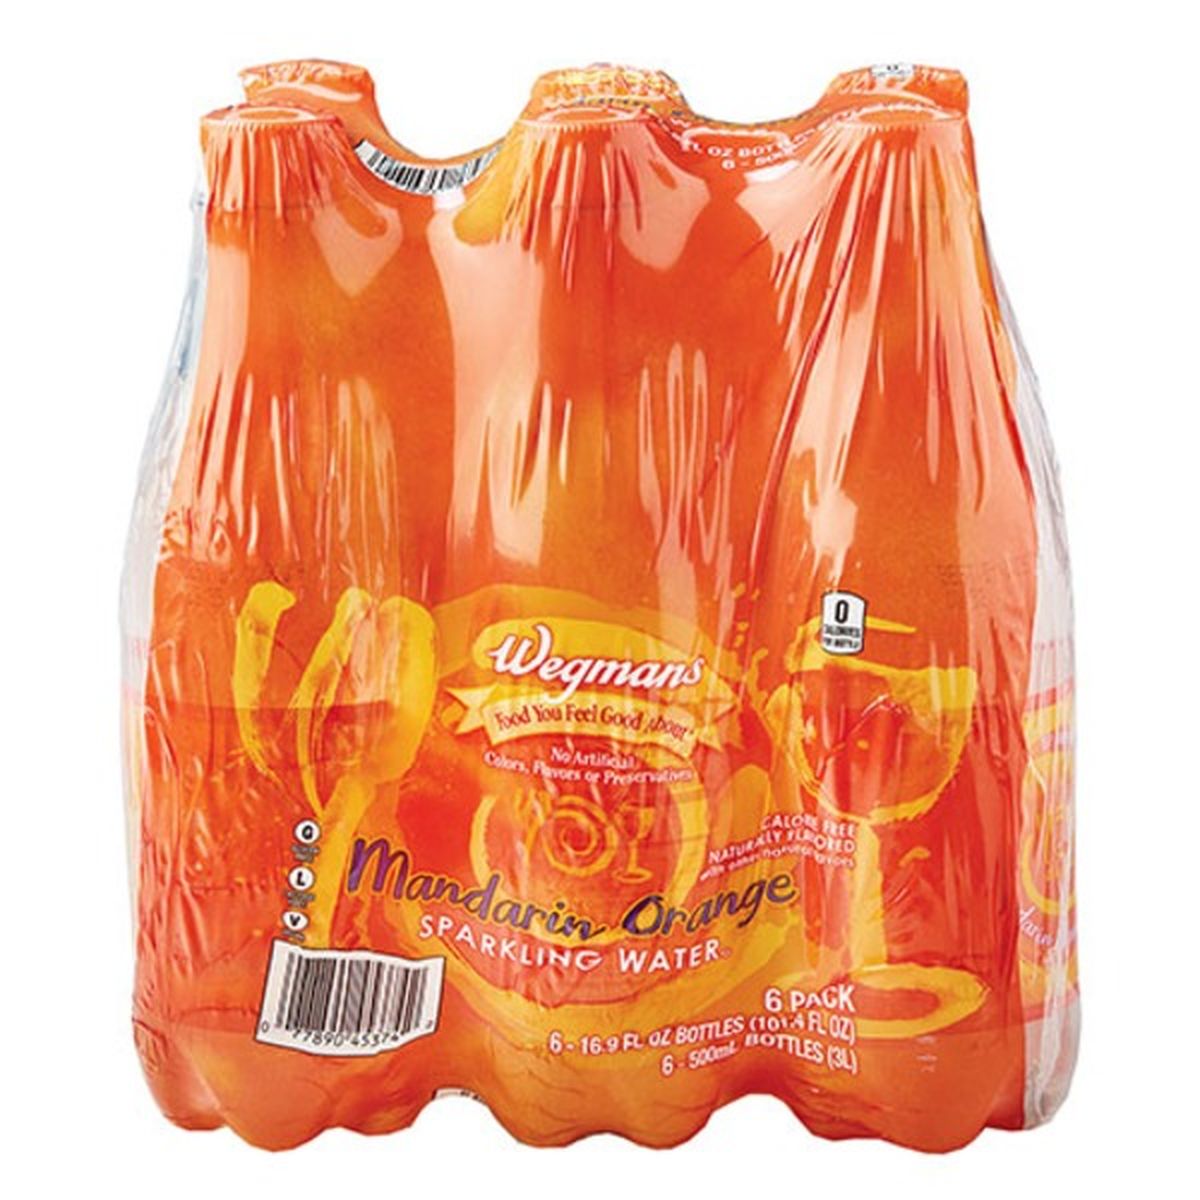 Calories in Wegmans Sparkling Water Mandarin Orange, 6 pack